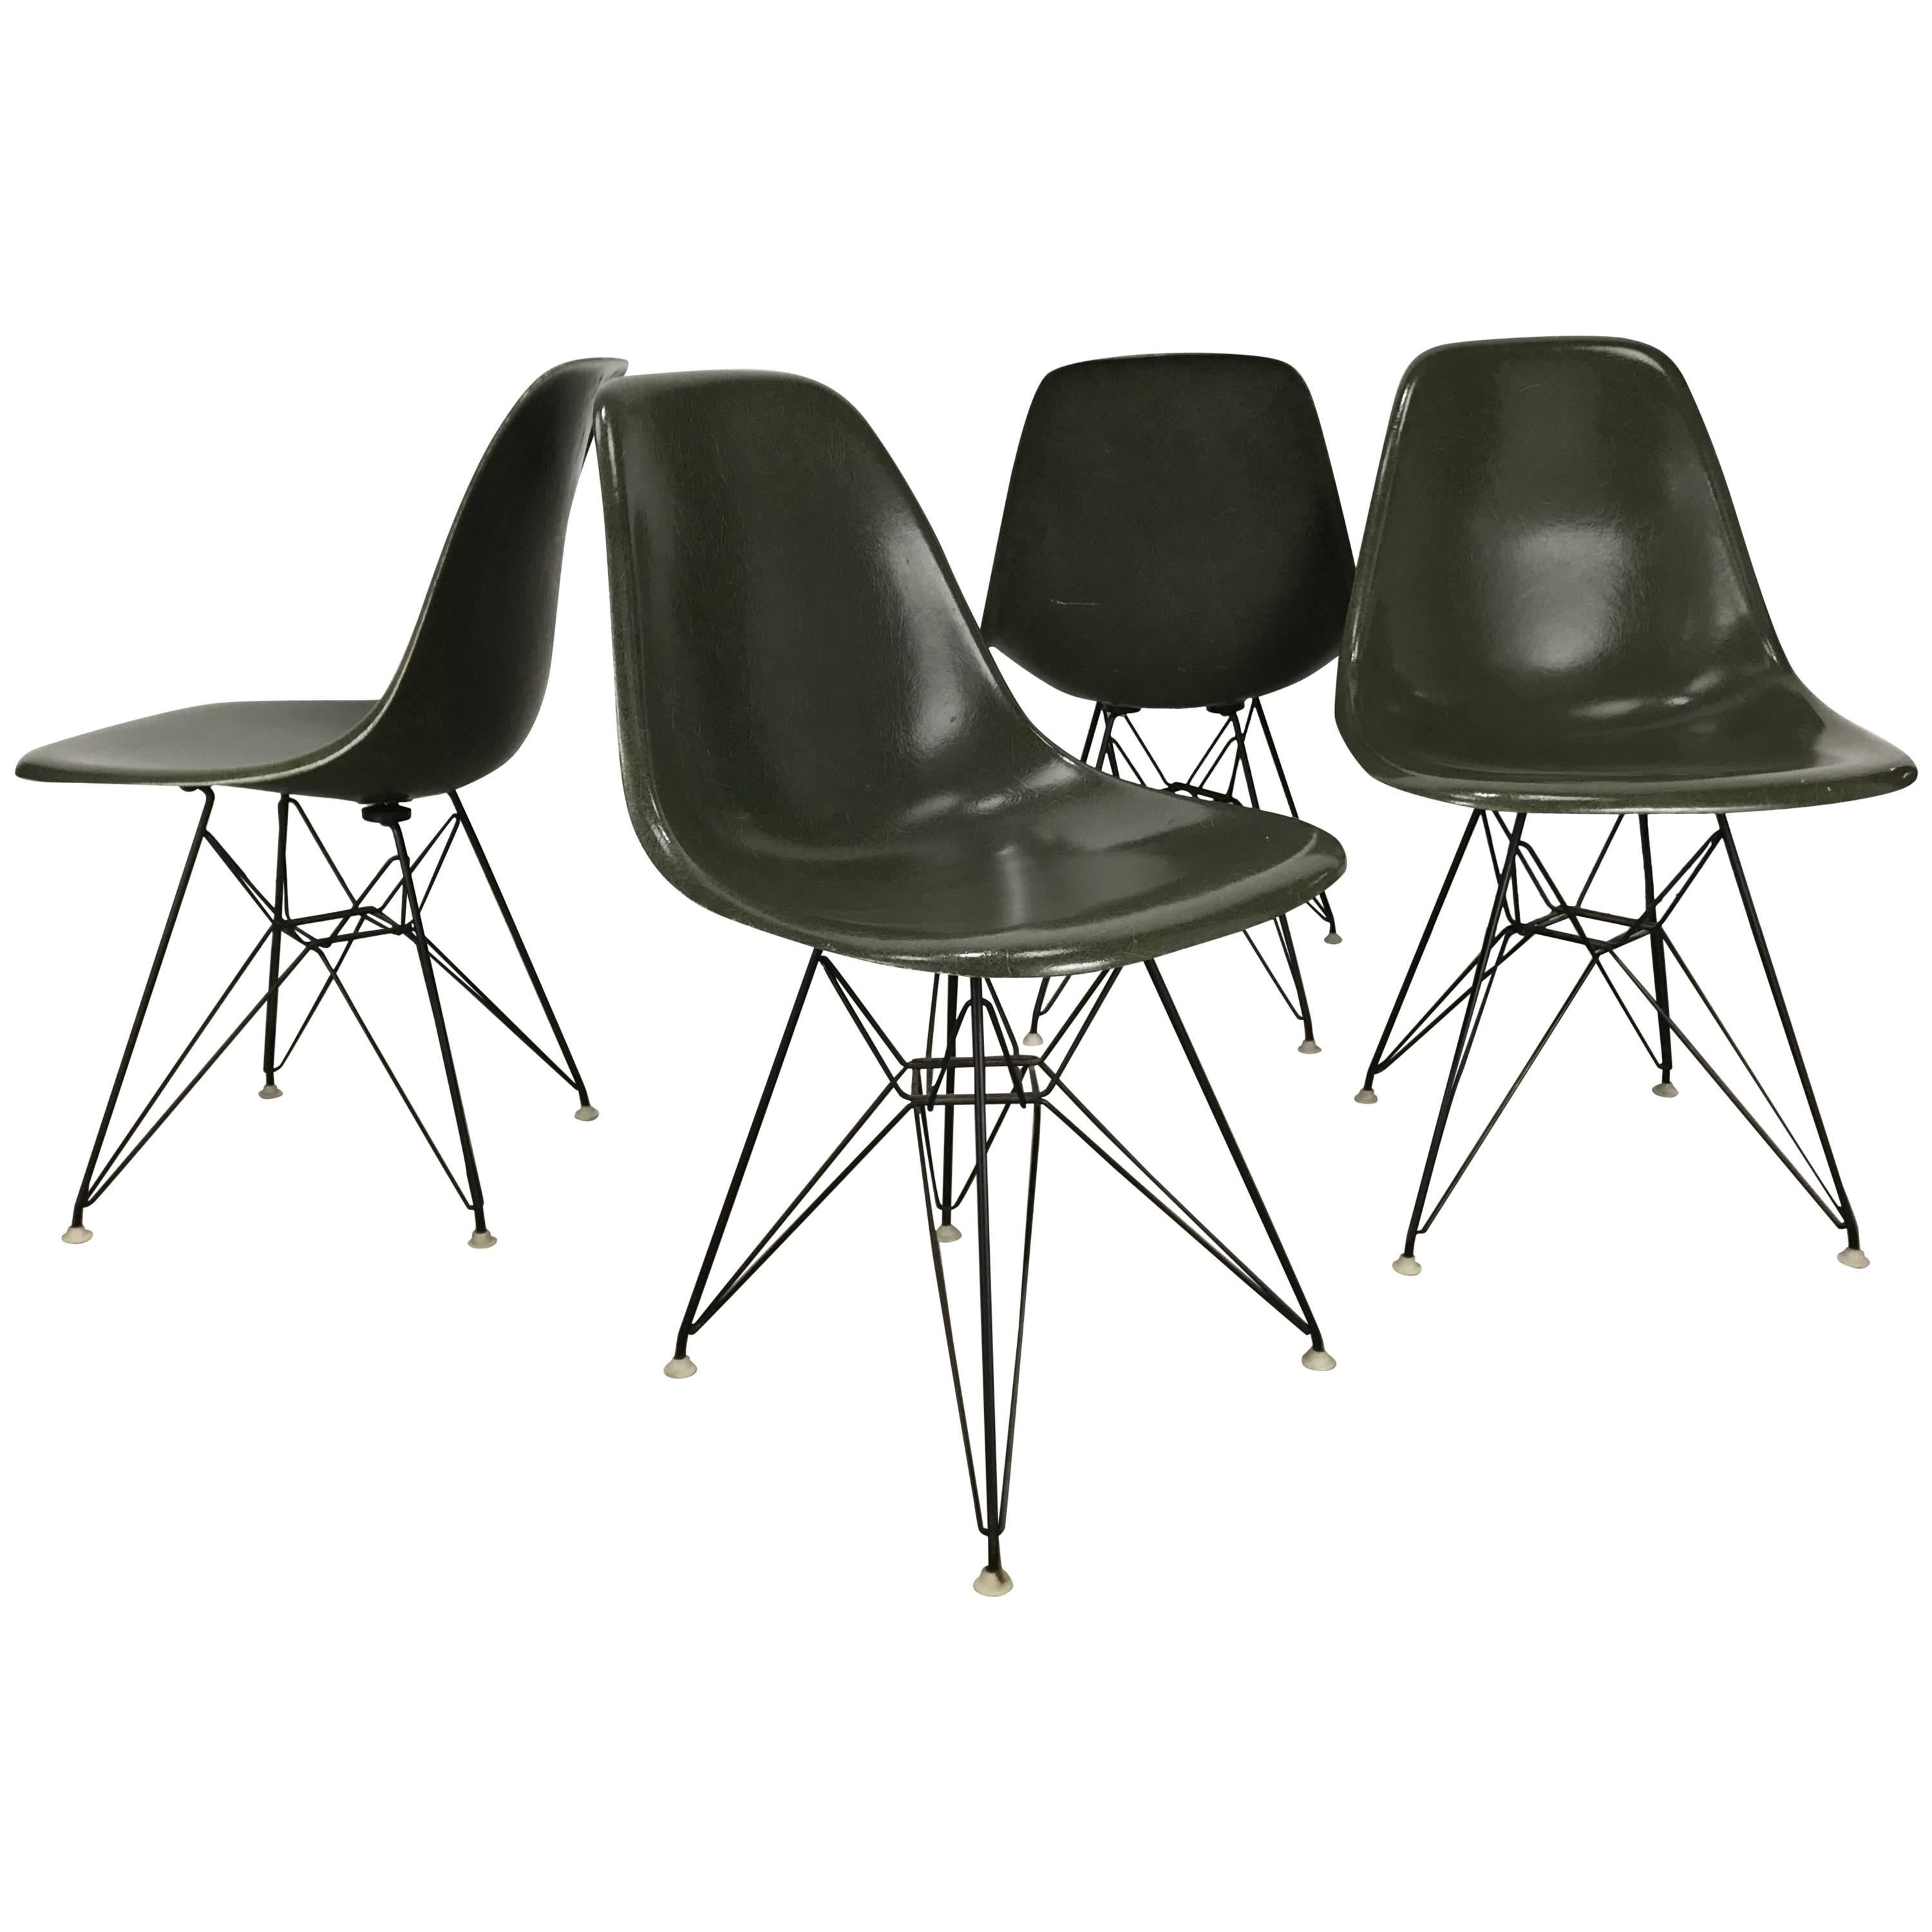 Early Eames Eiffel Chairs, ’DSR’ Molded Fiberglass Wire Base Herman Miller